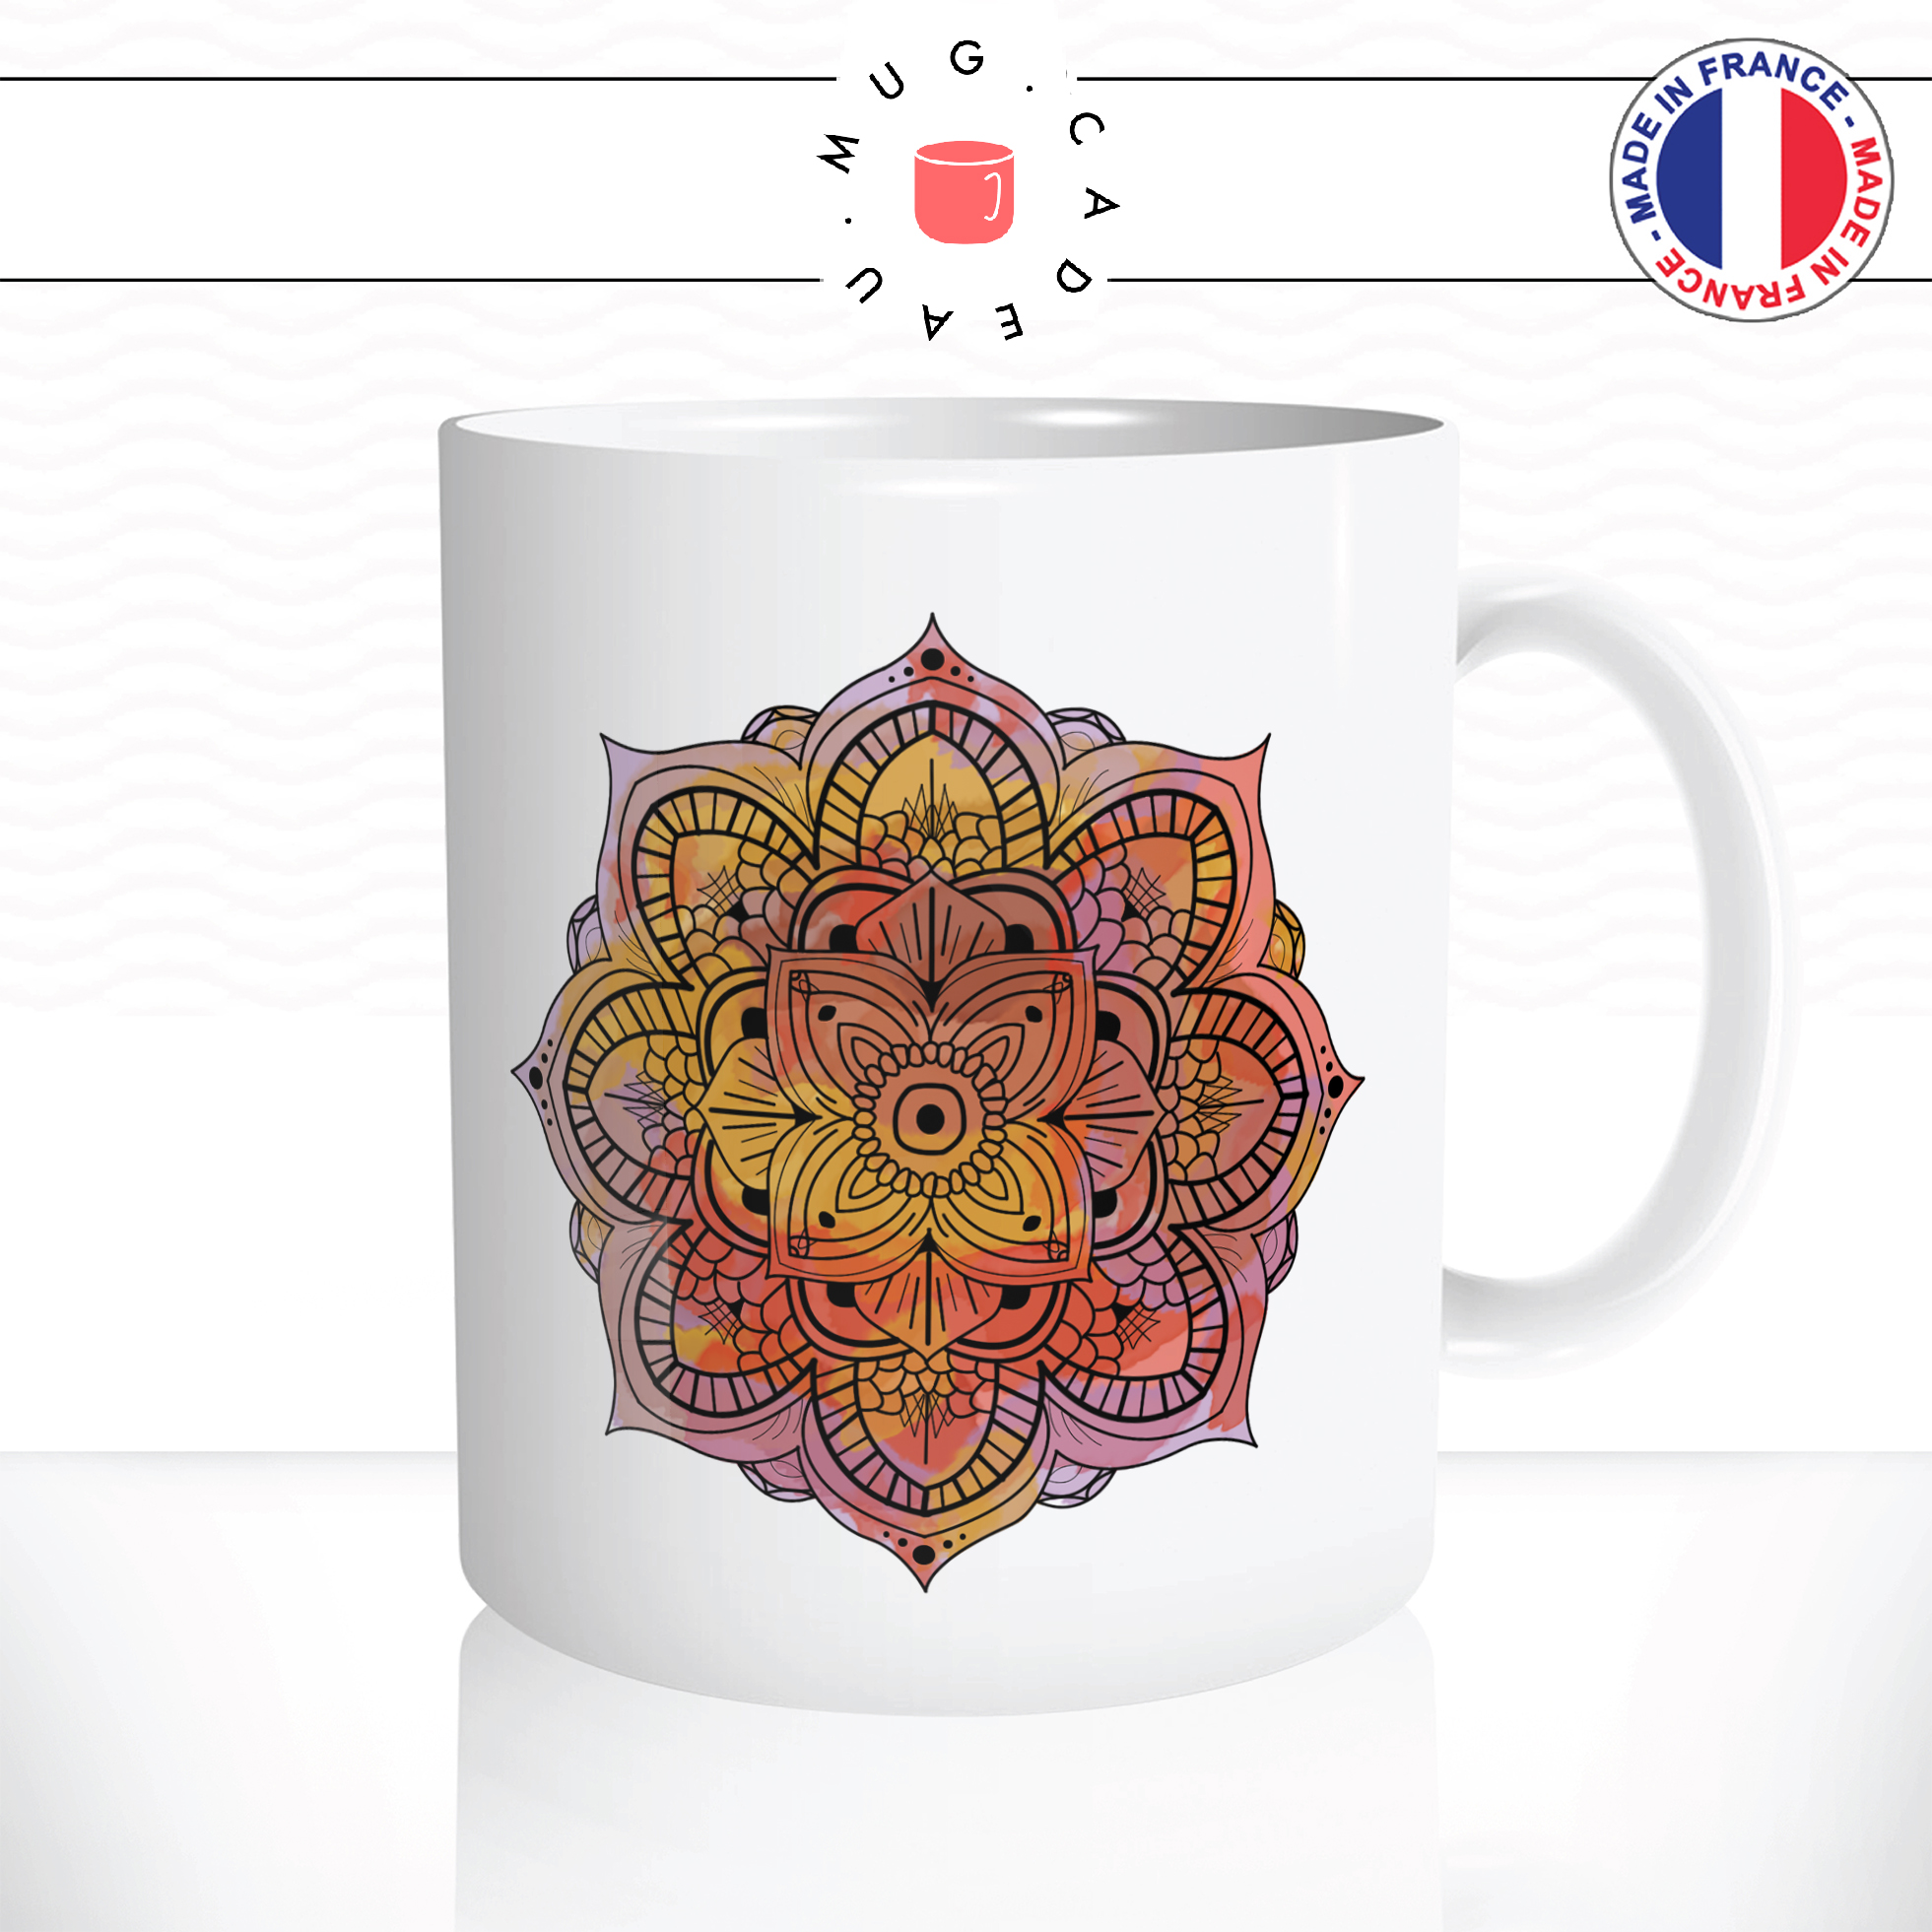 mug-tasse-ref8-fleur-aquarelle-couleurs-propre-mandala-cafe-the-mugs-tasses-personnalise-anse-droite